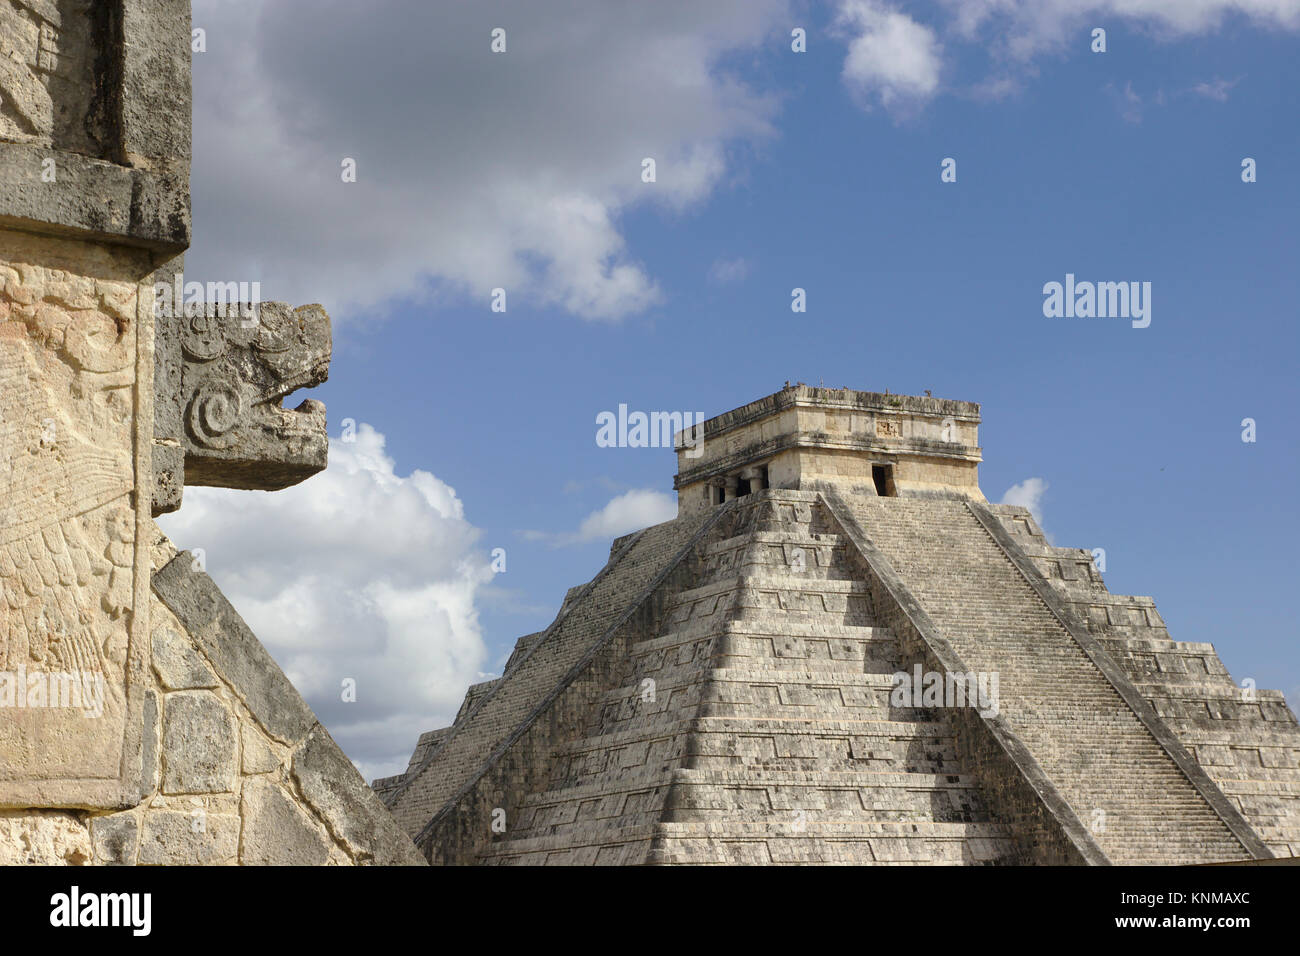 Chichén Itzá, pyramid El Castillo and Platform of the Jaguars, Mexico Stock Photo